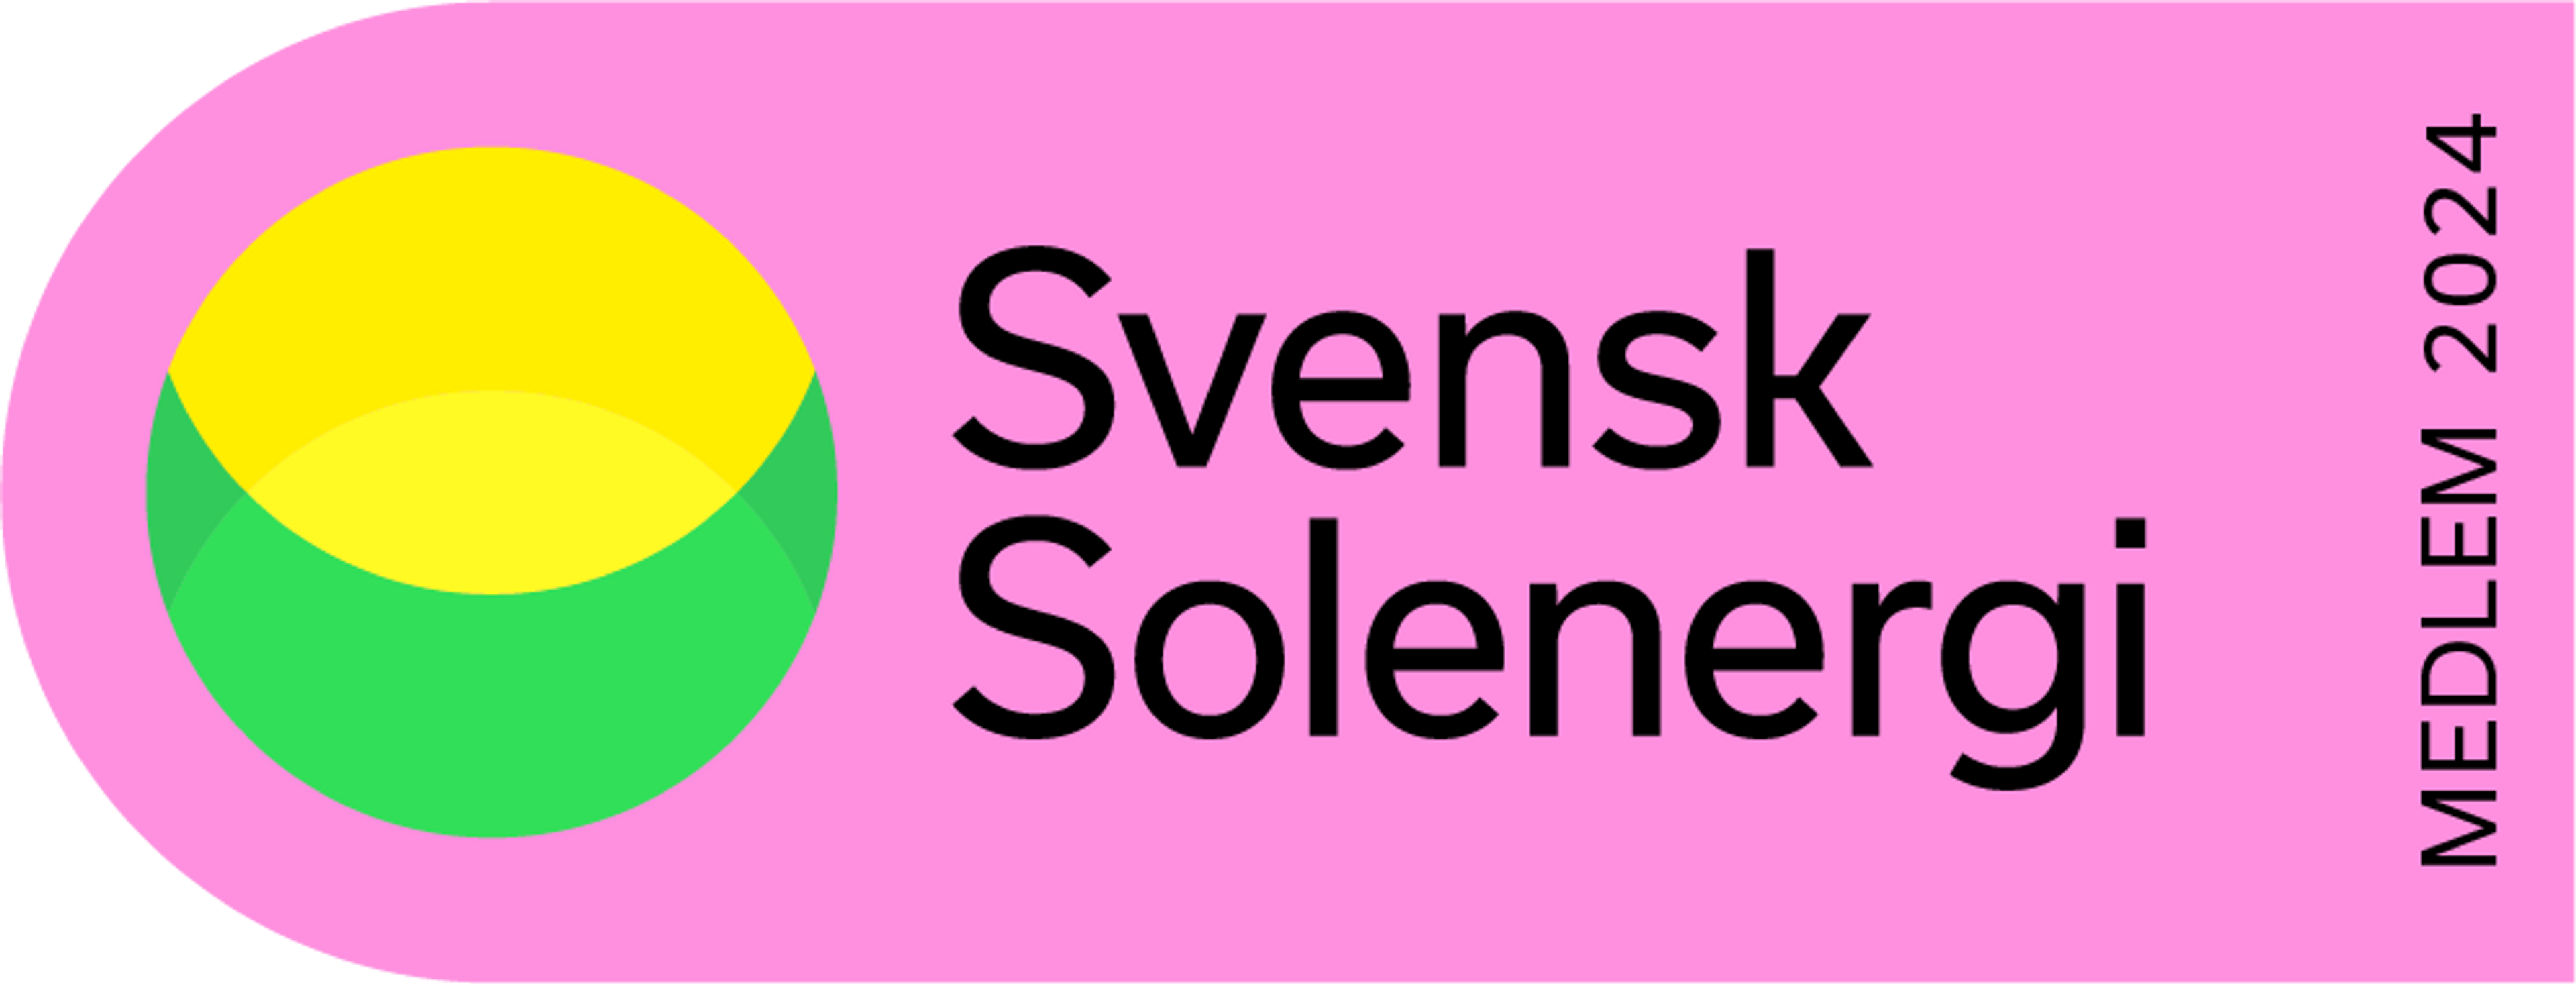 Svensk Solenergi logga